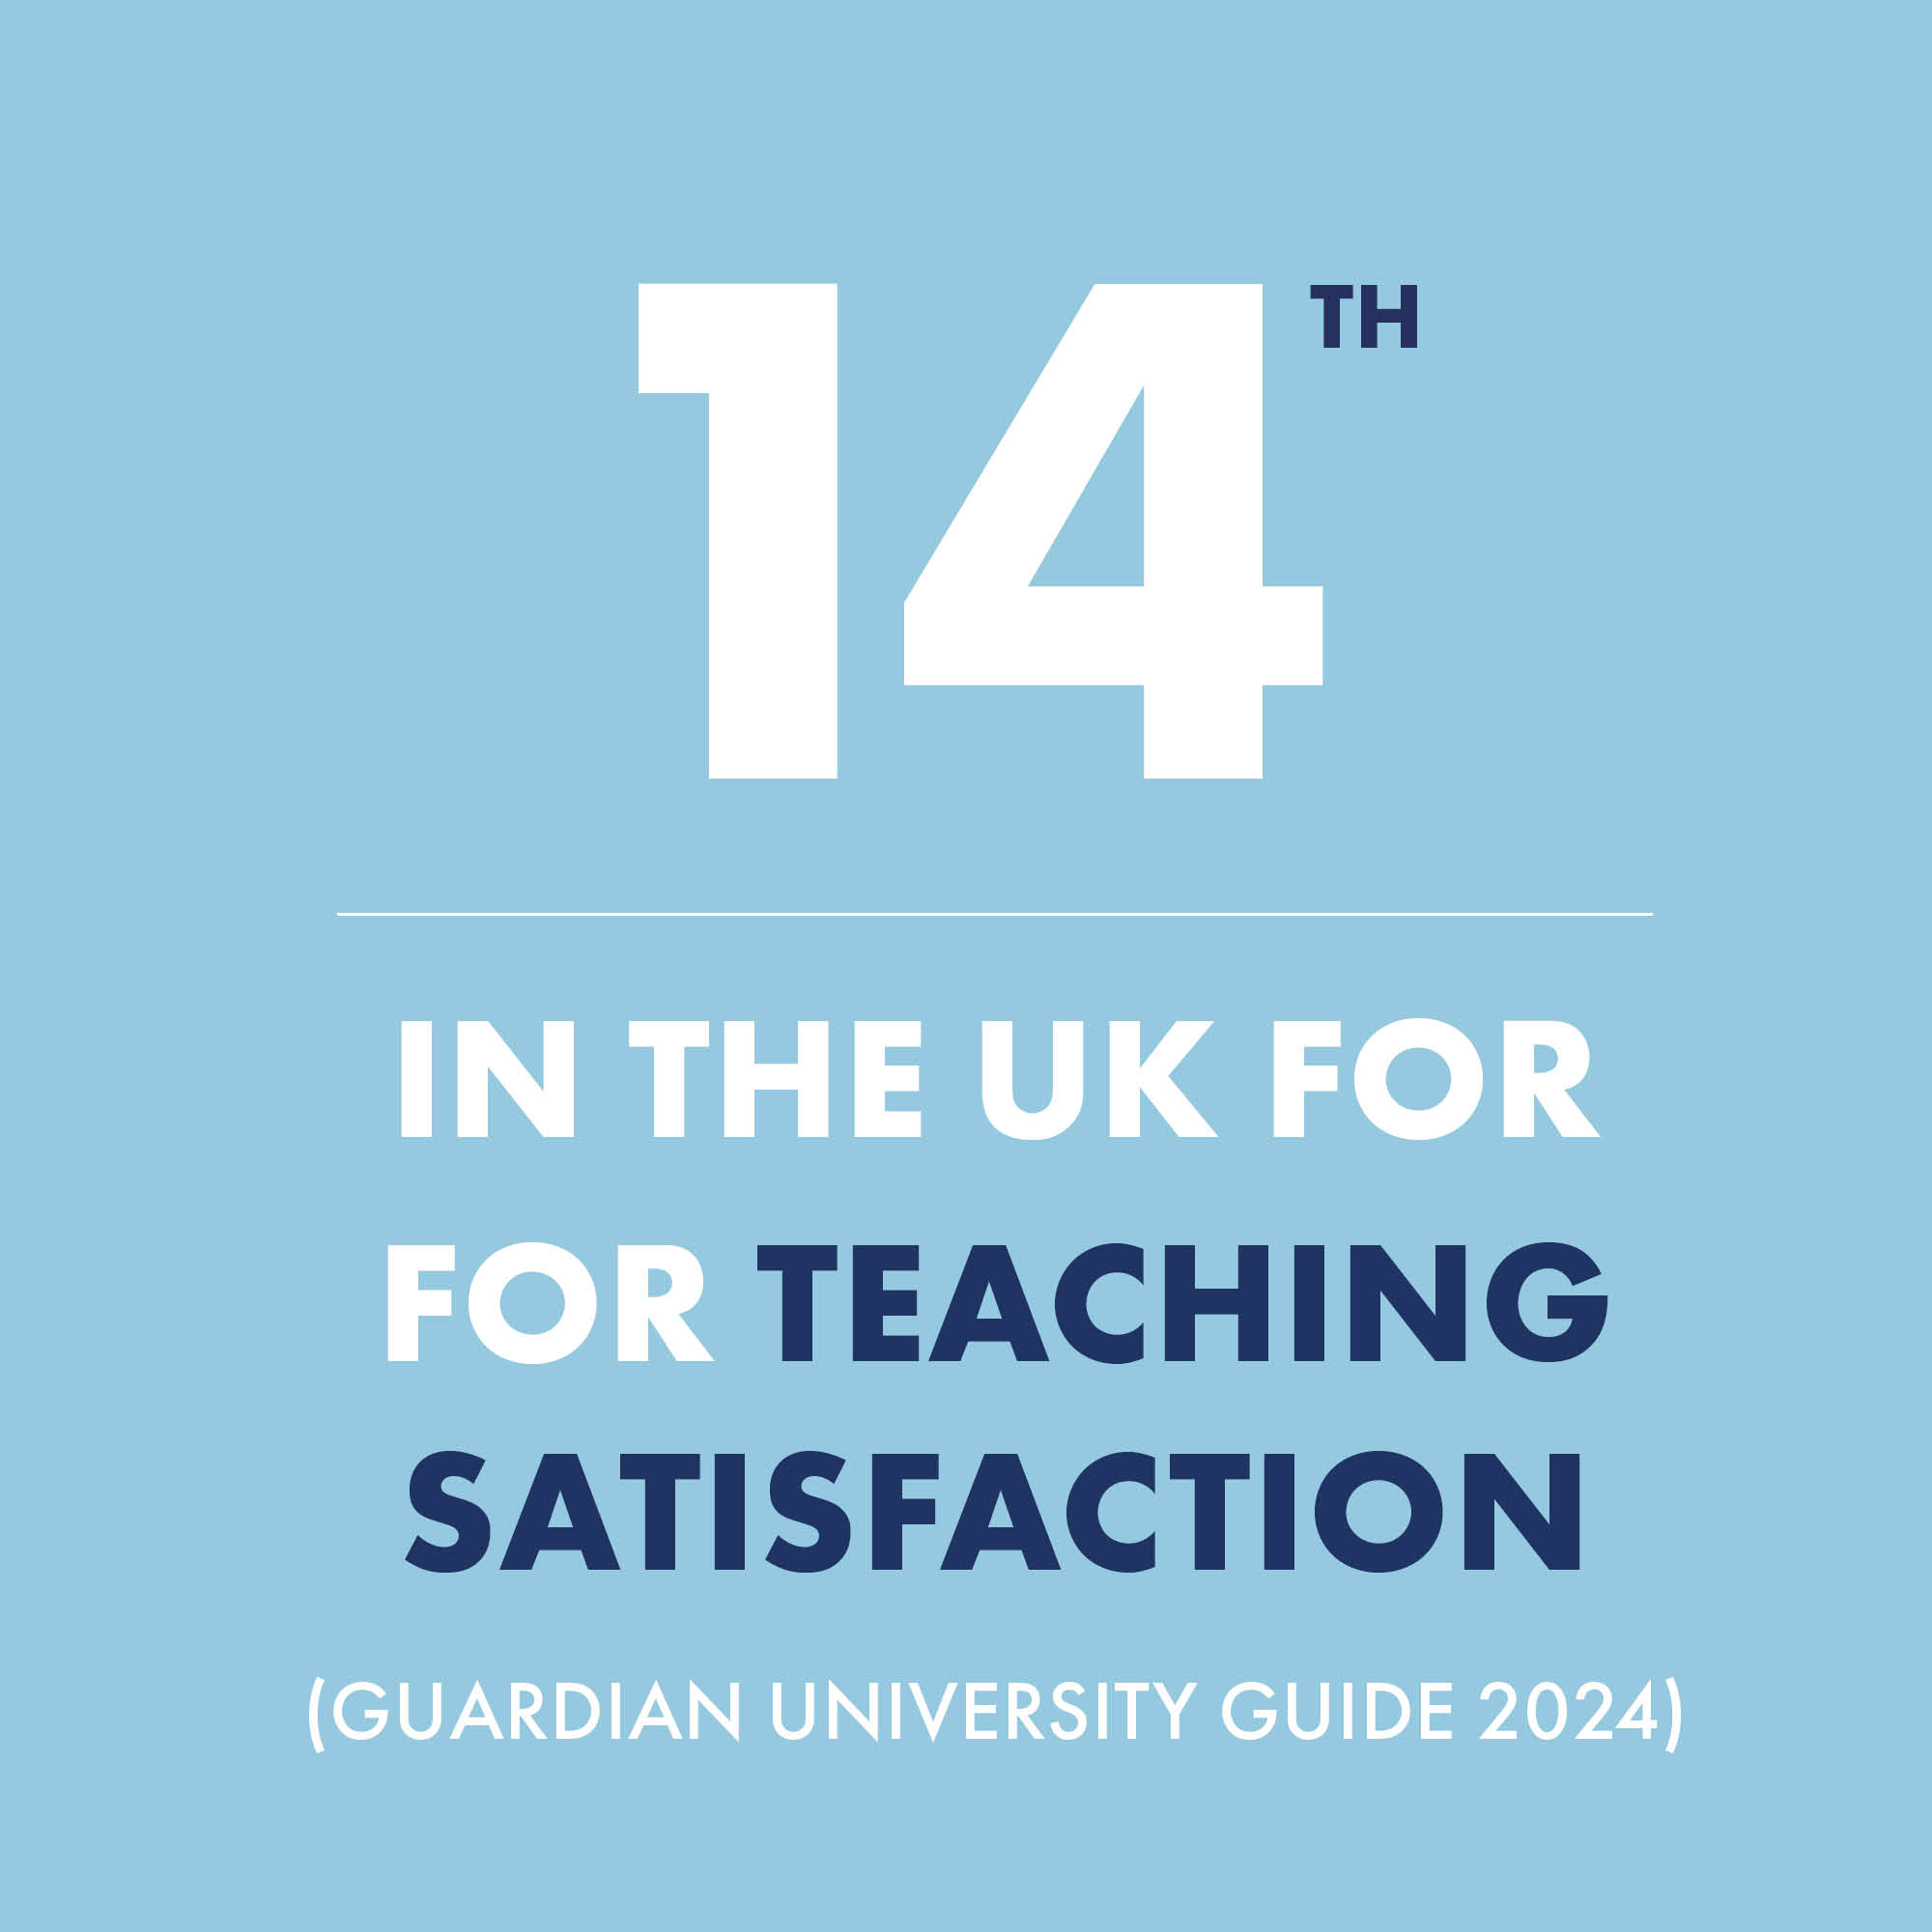 Law teaching satisfaction rating